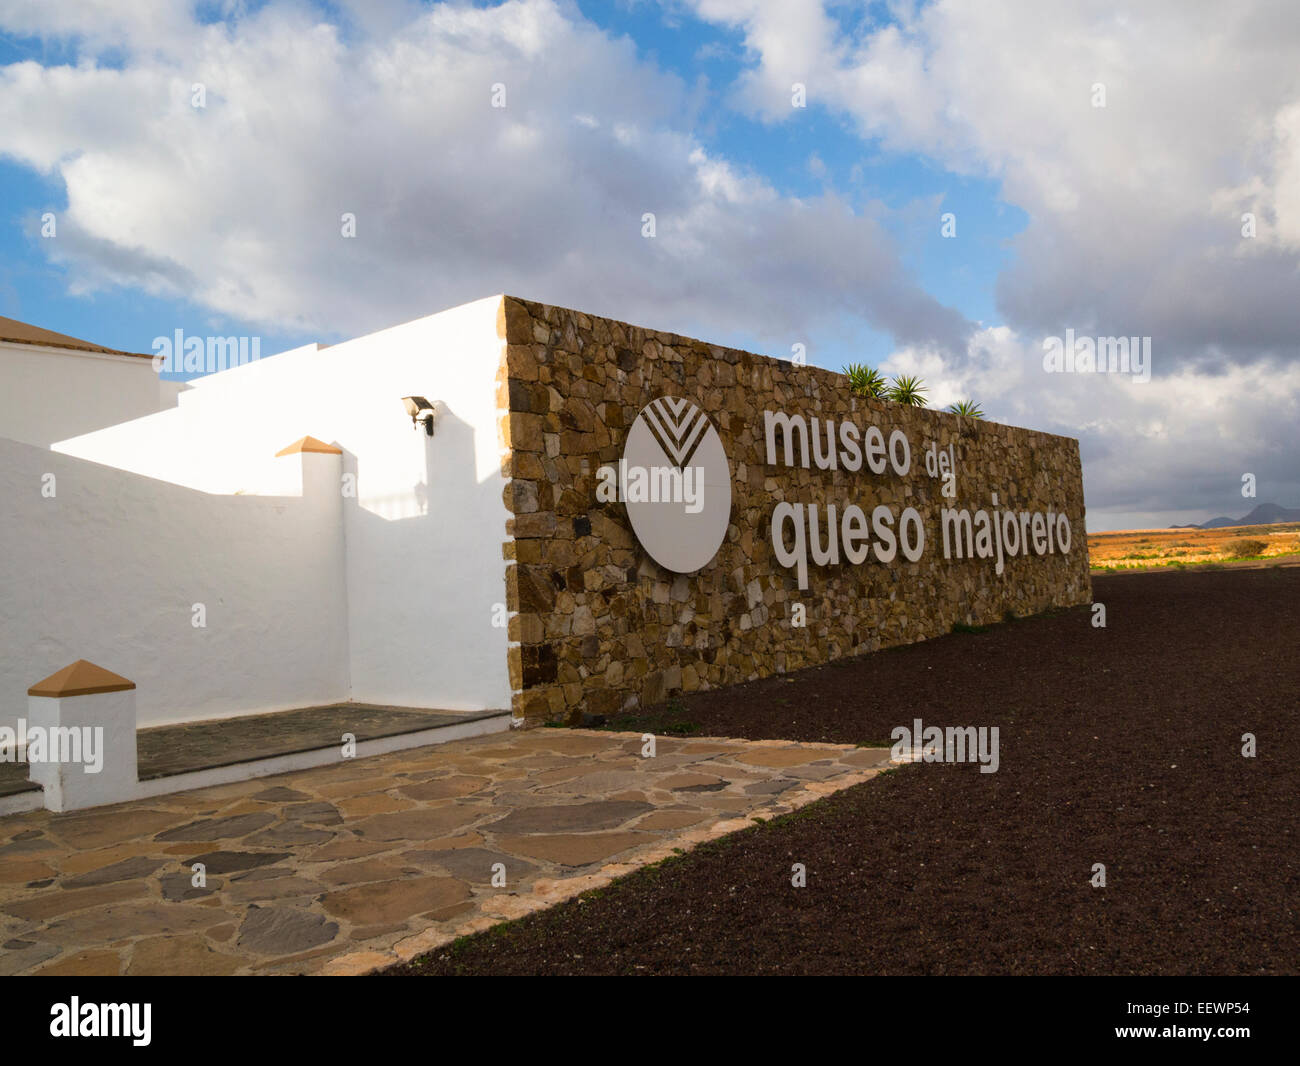 Museo del Queso Majorero Centro de Artesania Molino de Antigua Fuerteventura Canary Islands Museum with hands-on cheesemaking displays Stock Photo